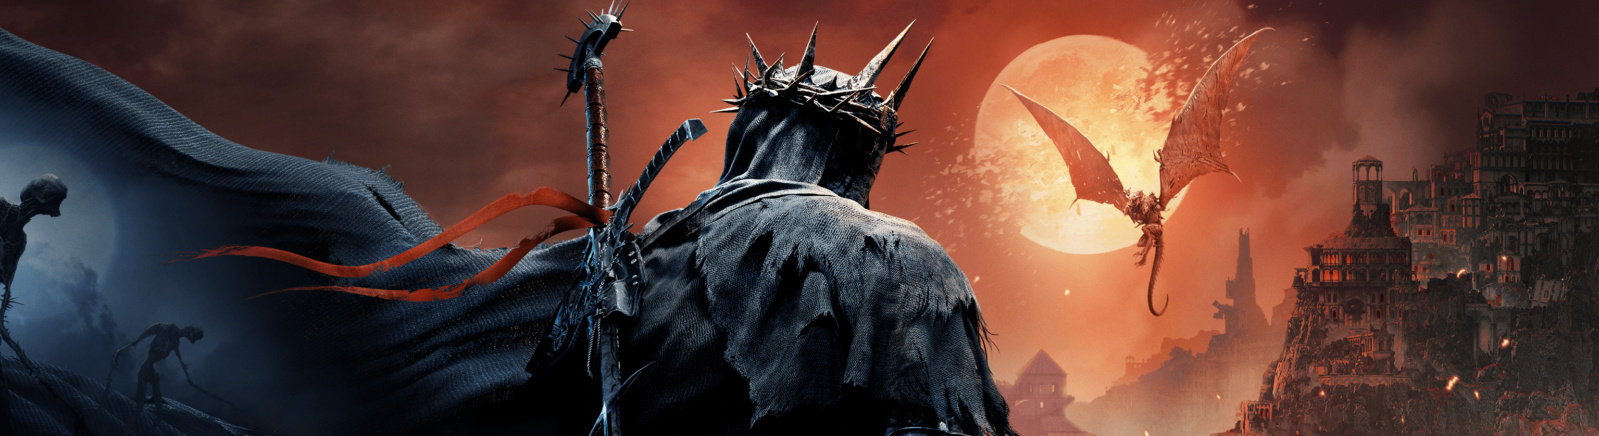 Дата выхода Lords of the Fallen  на PC, PS5 и Xbox Series X/S в России и во всем мире